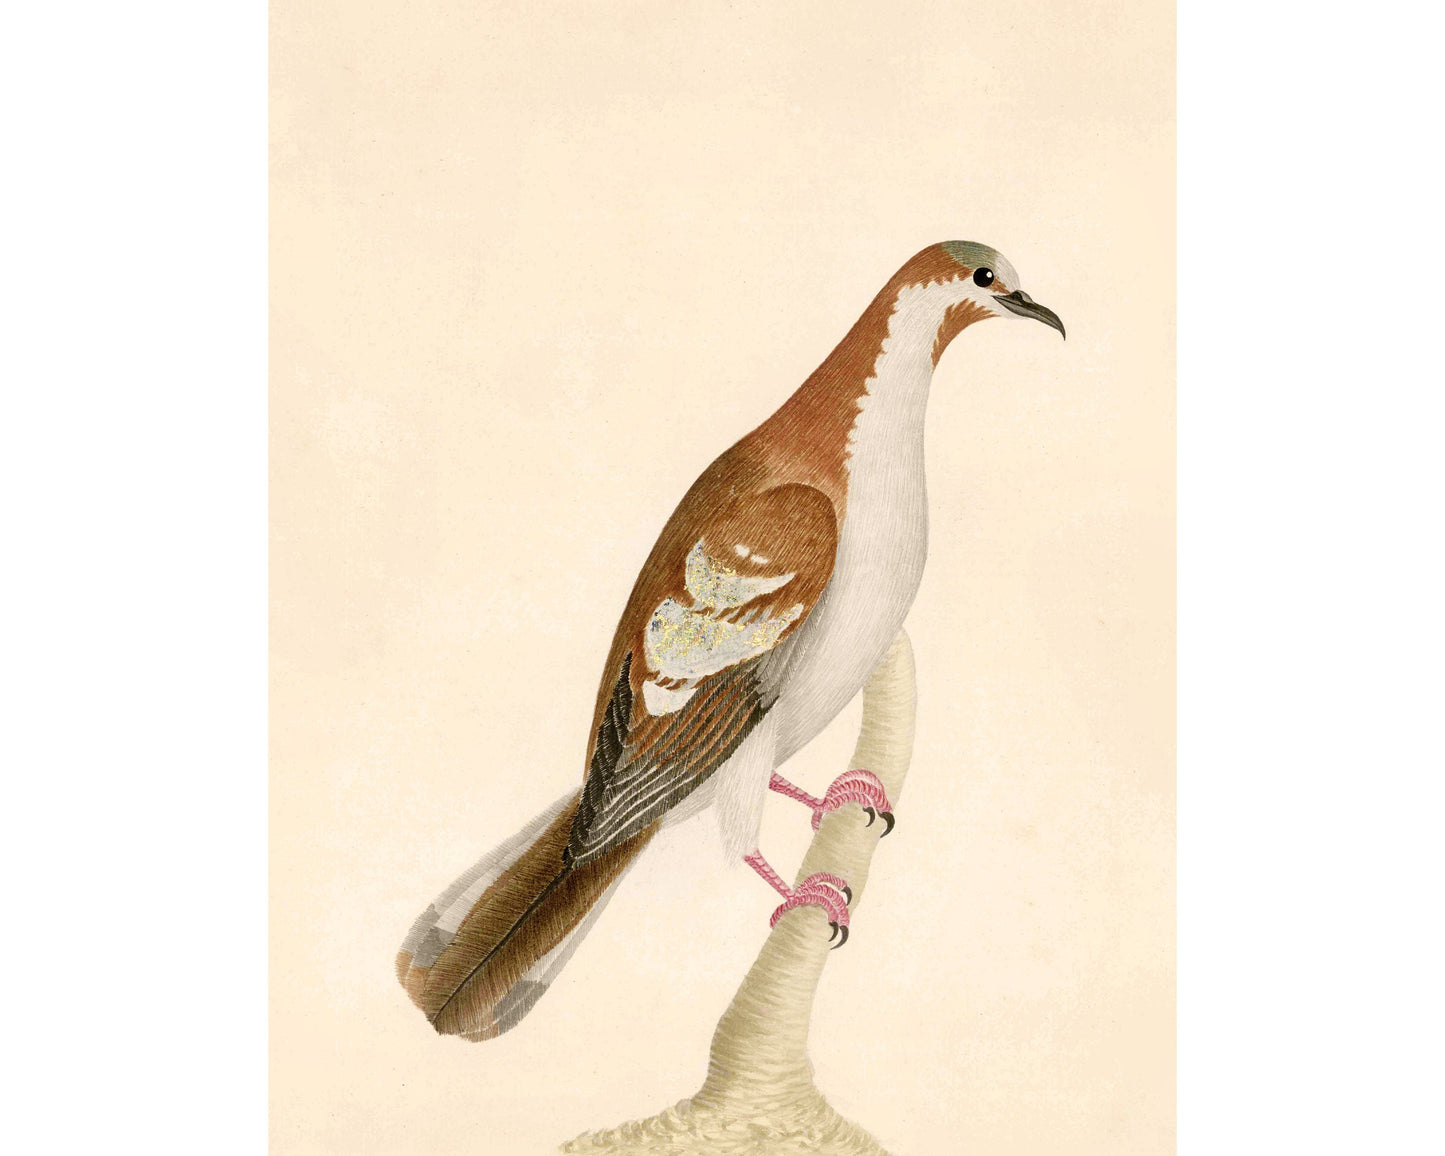 Antique bird art | Pink talons | 18th century bird illustration | Natural history print | Animal décor | Modern vintage | Eco-friendly gift